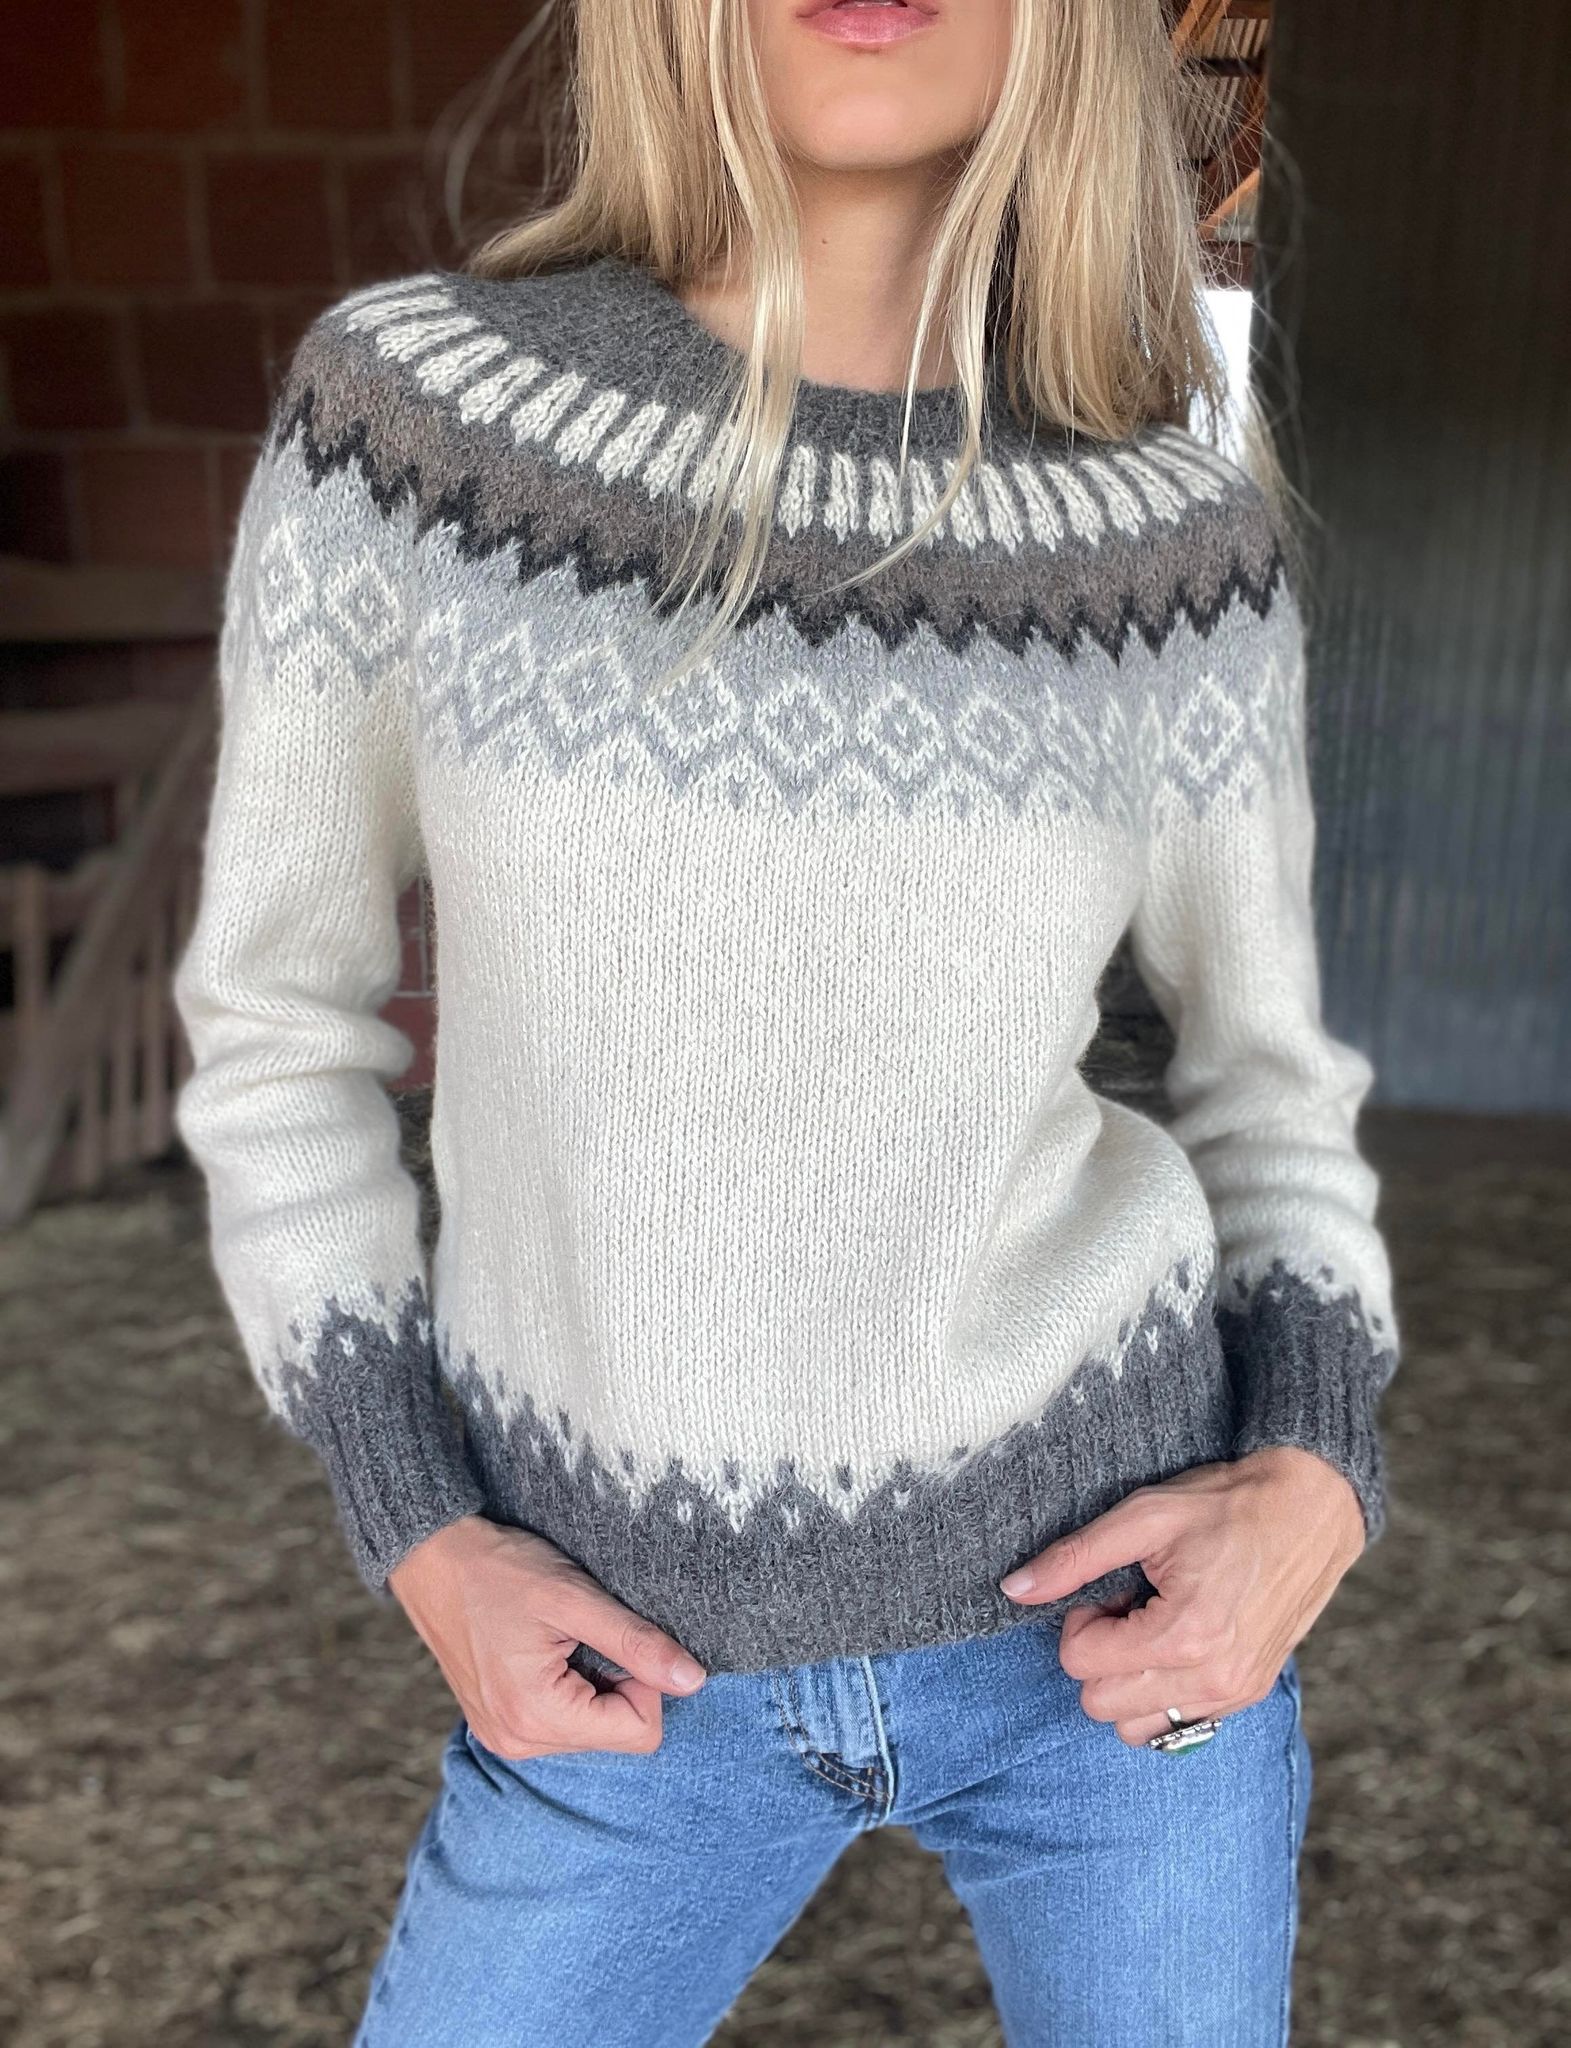 Vintage Alpaca Sweater - XS